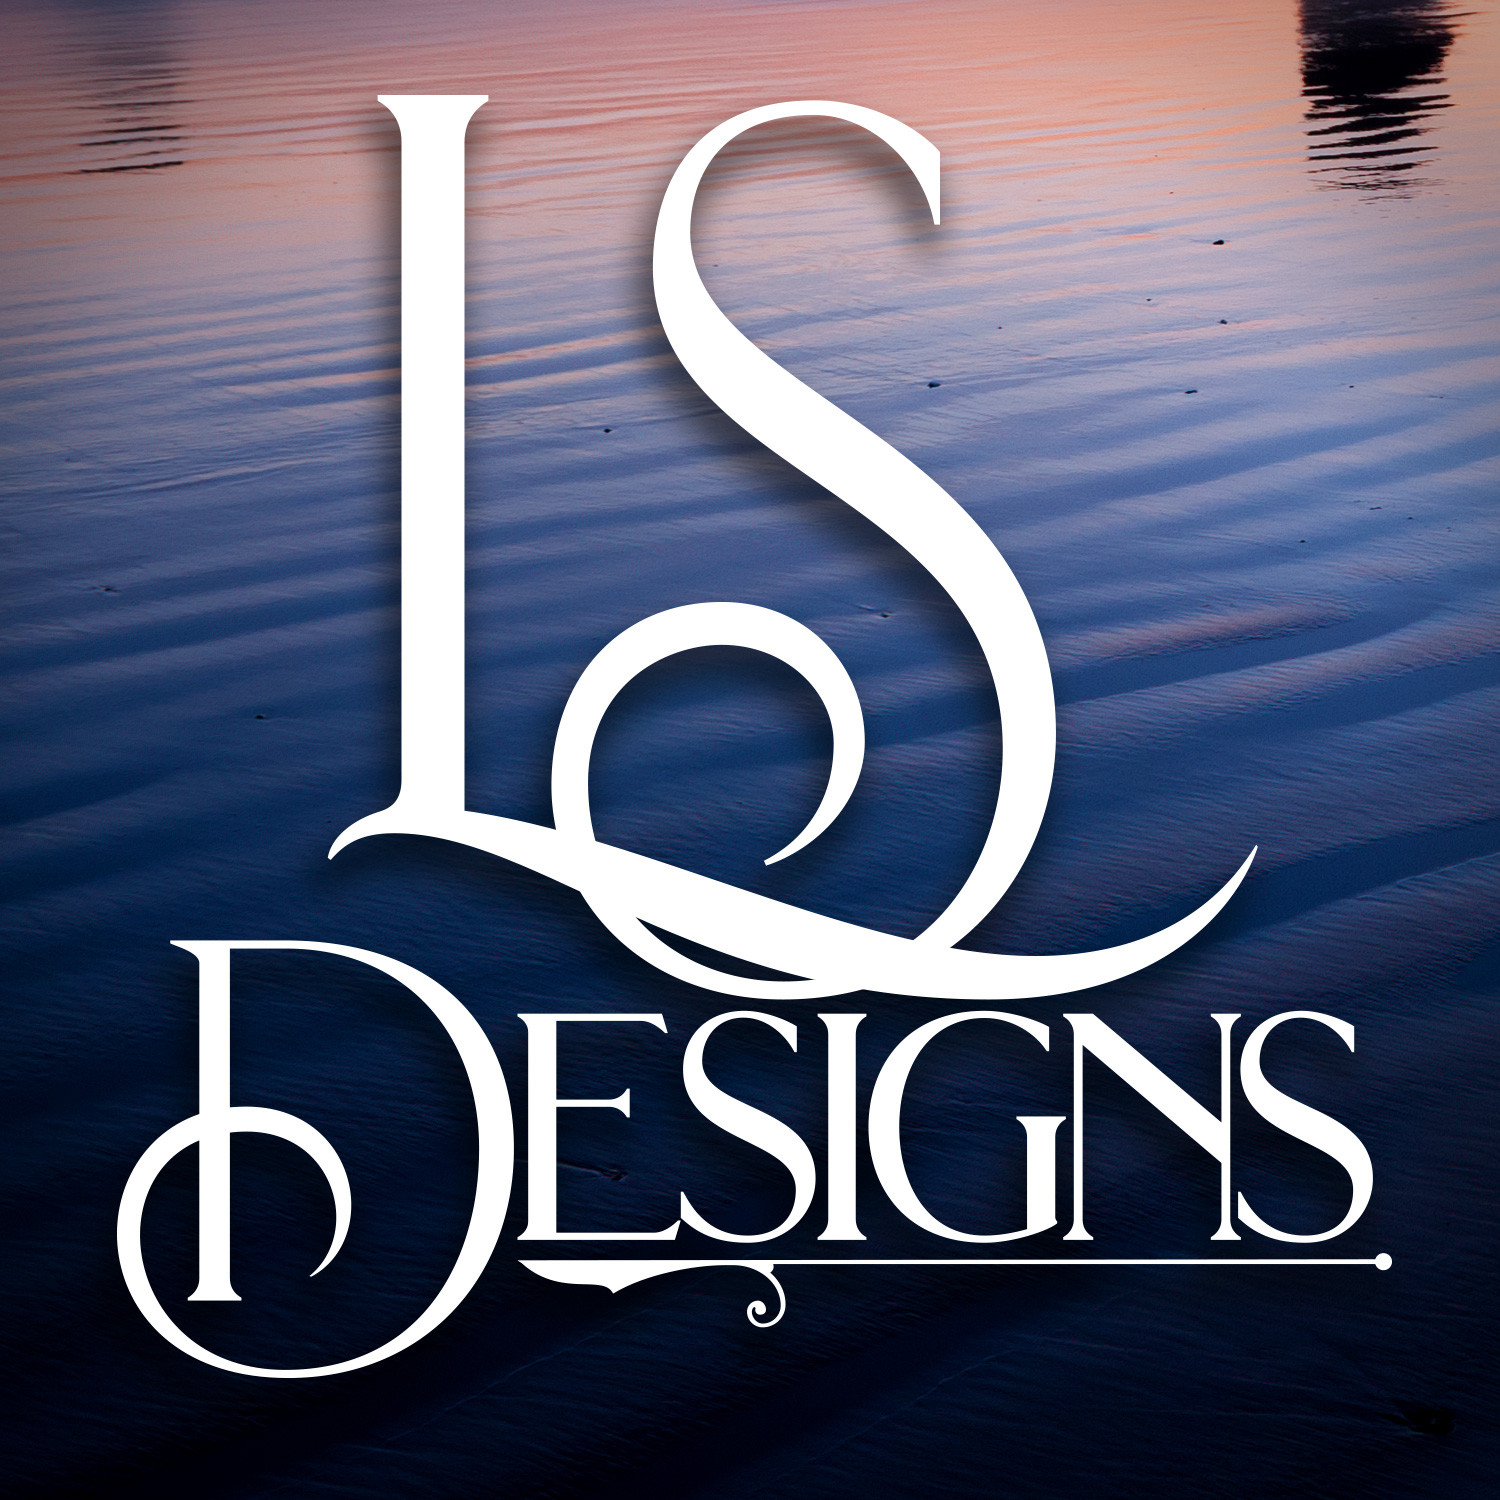 leestudiodesigns's profile picture